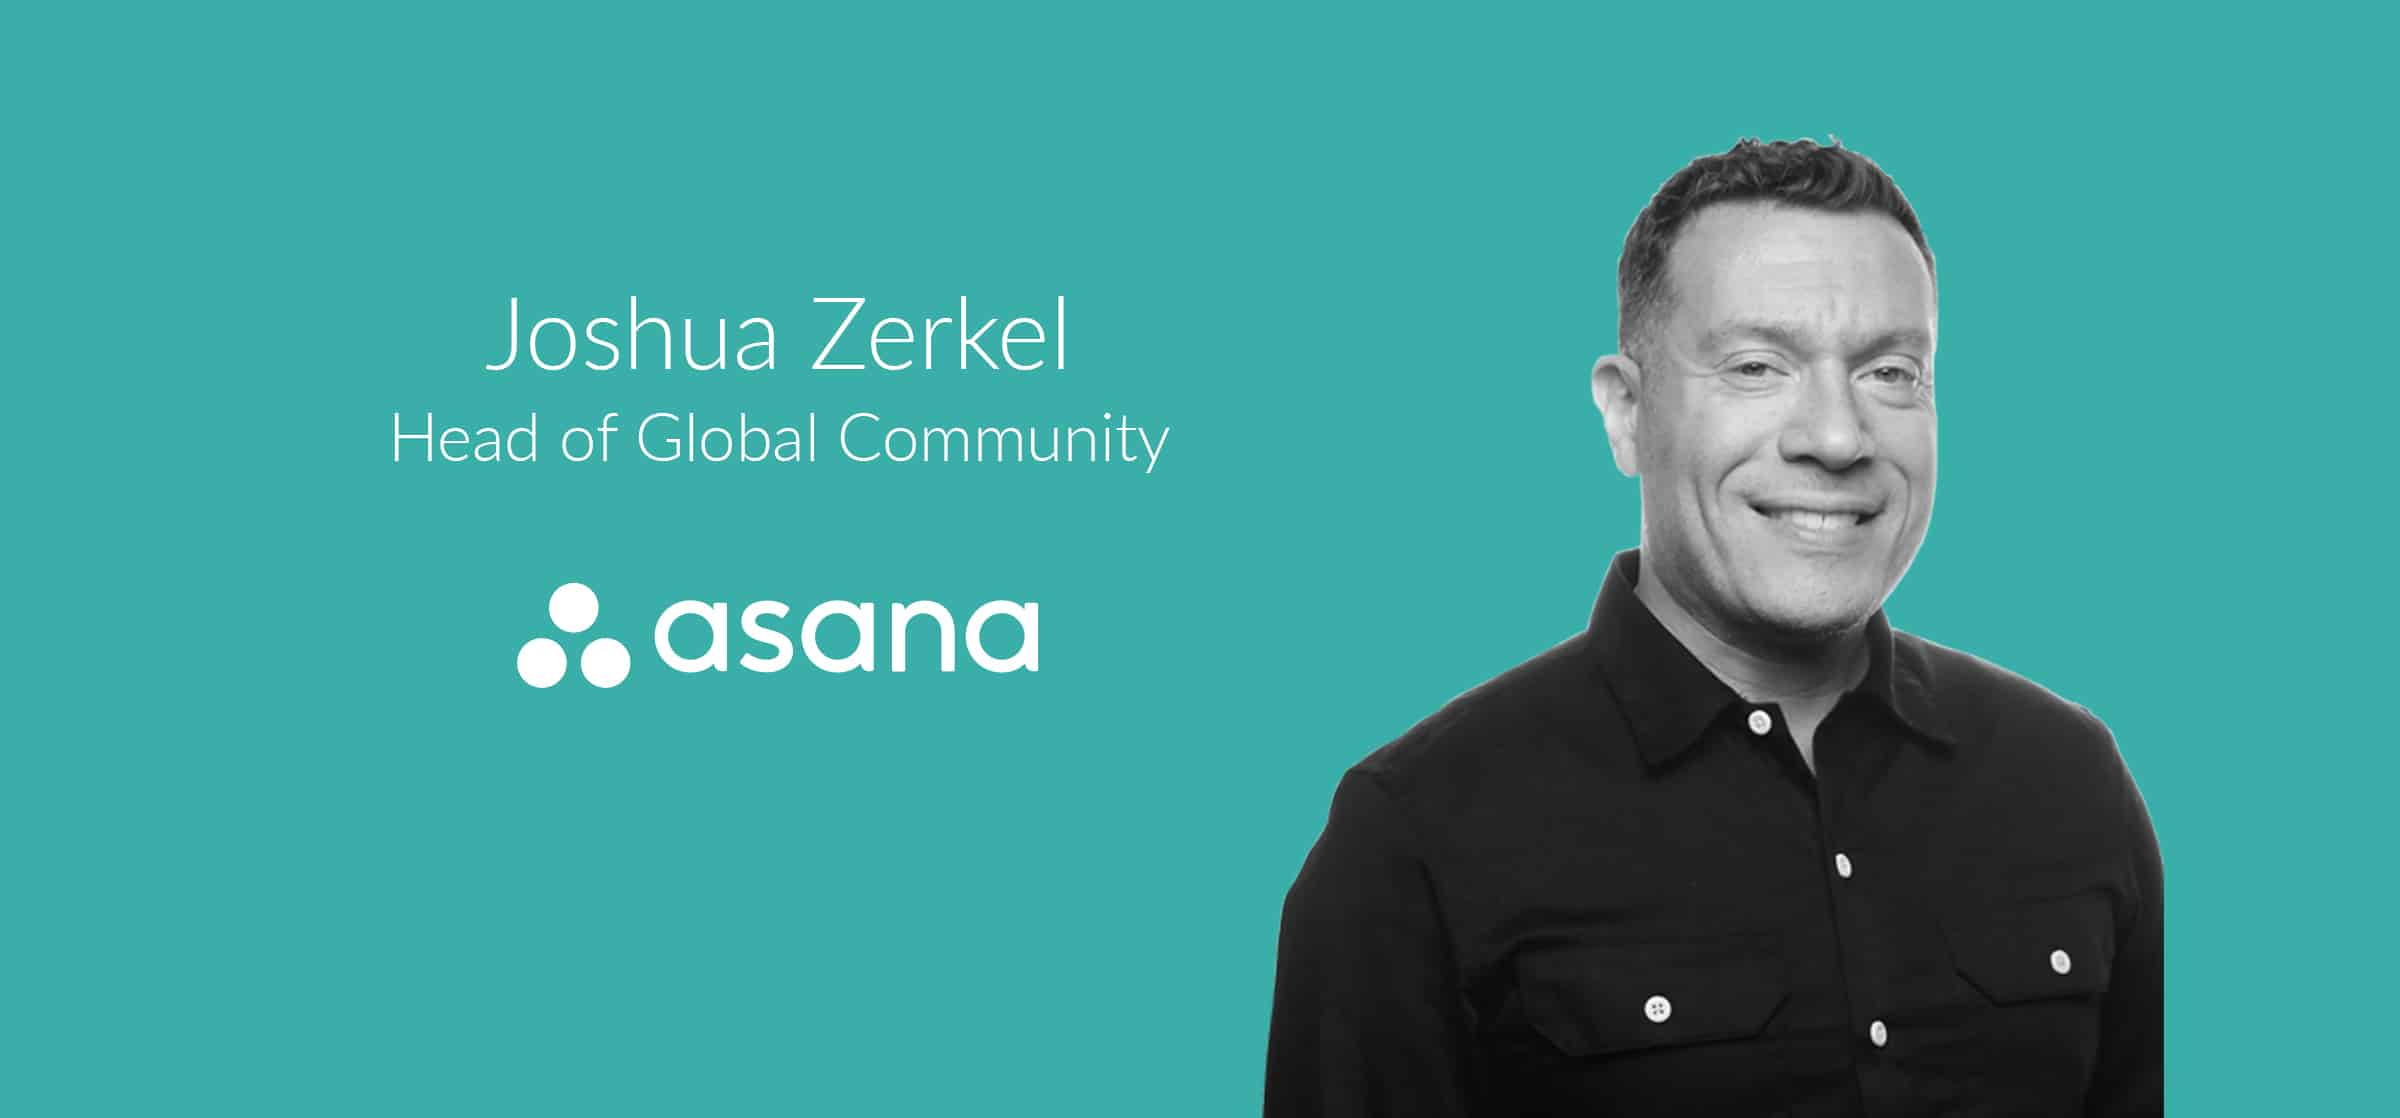 Joshua Zerkel - Head of Global Community at Asana